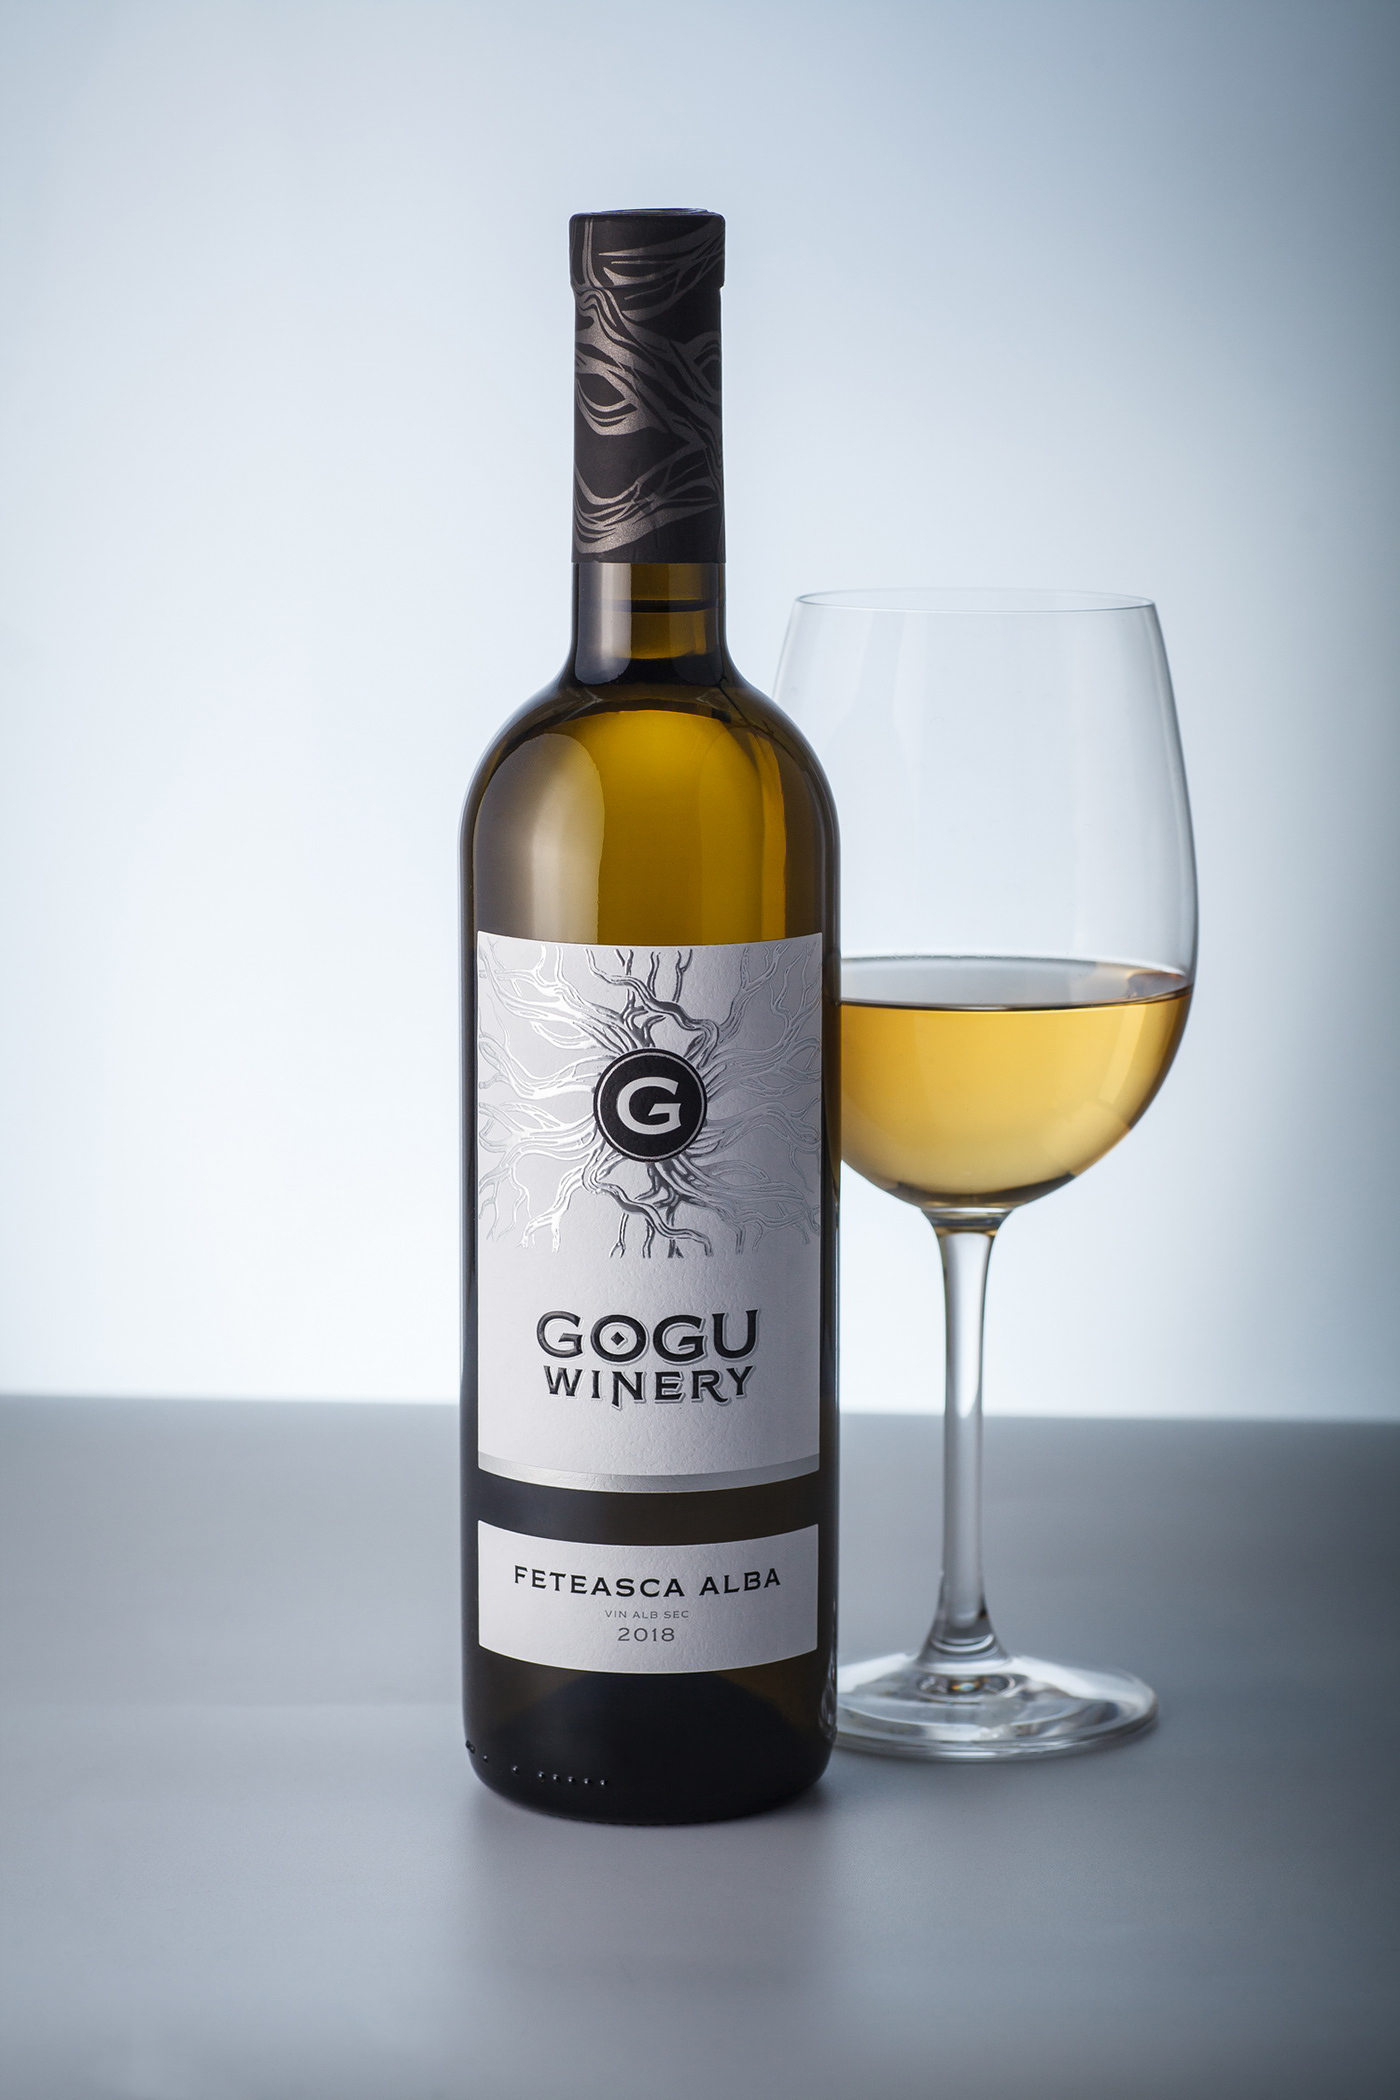 43oz design studio Moldova gogu winery feteasca alba wine label Packaging label design White